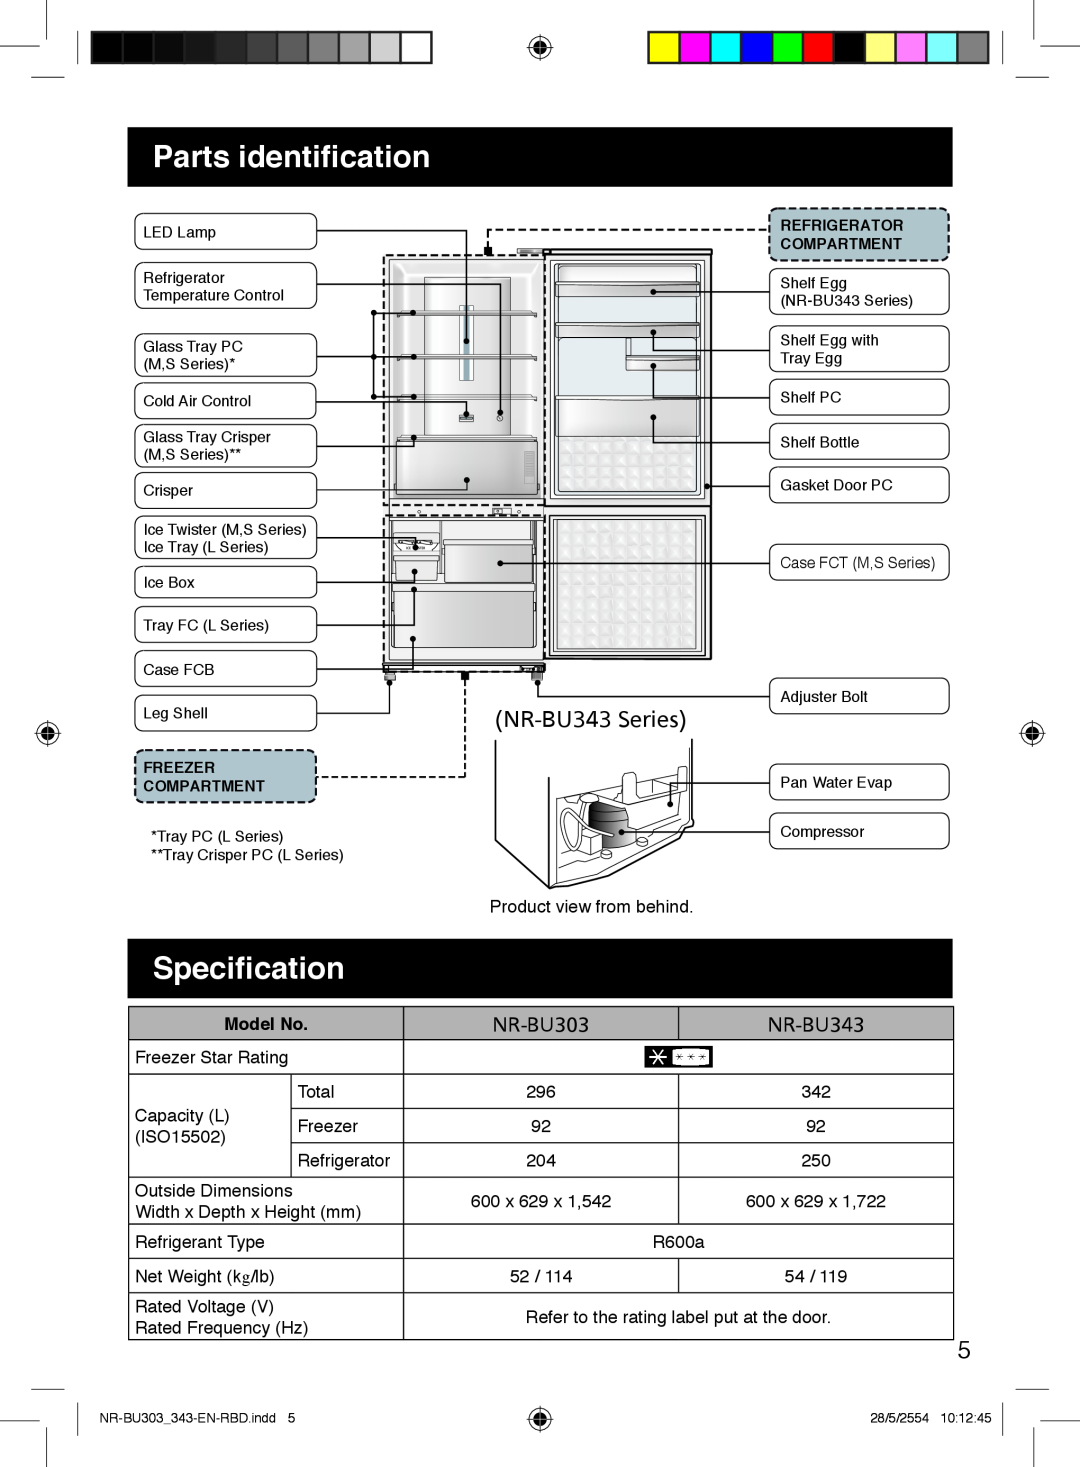 Panasonic NR-BU303 warranty Parts identification, Specification, NR-BU343Series, Model No 